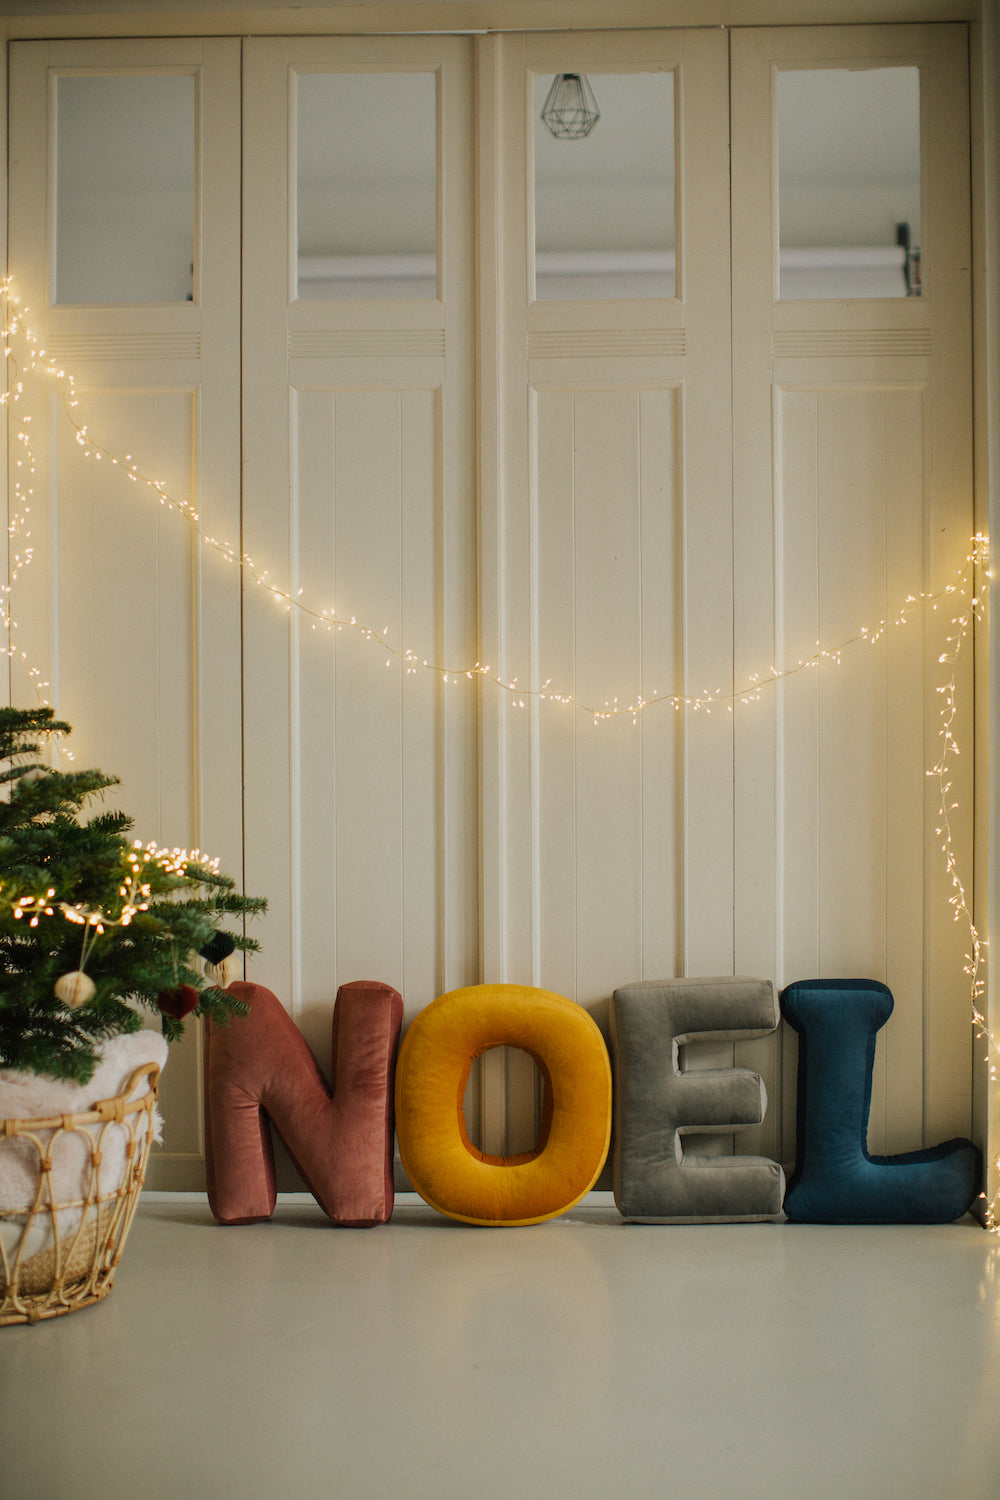 Velvet letter cushions by Bettys Home in word NOEL standing next to christmas tree